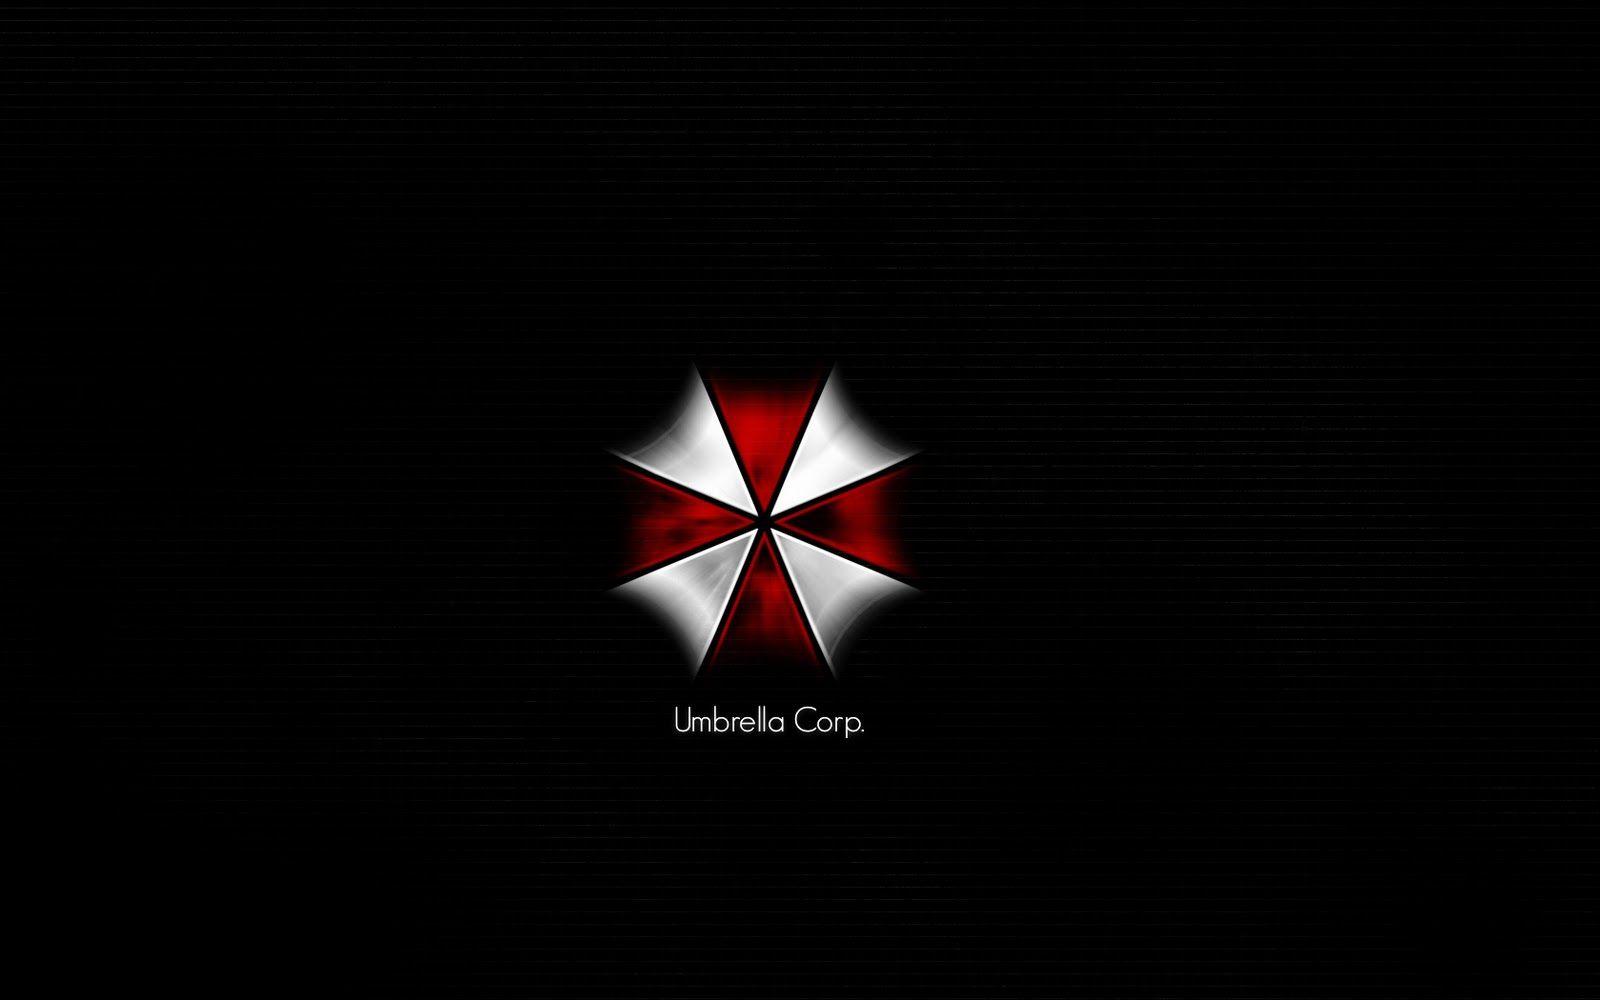 Umbrella Corporation Background. Adorable